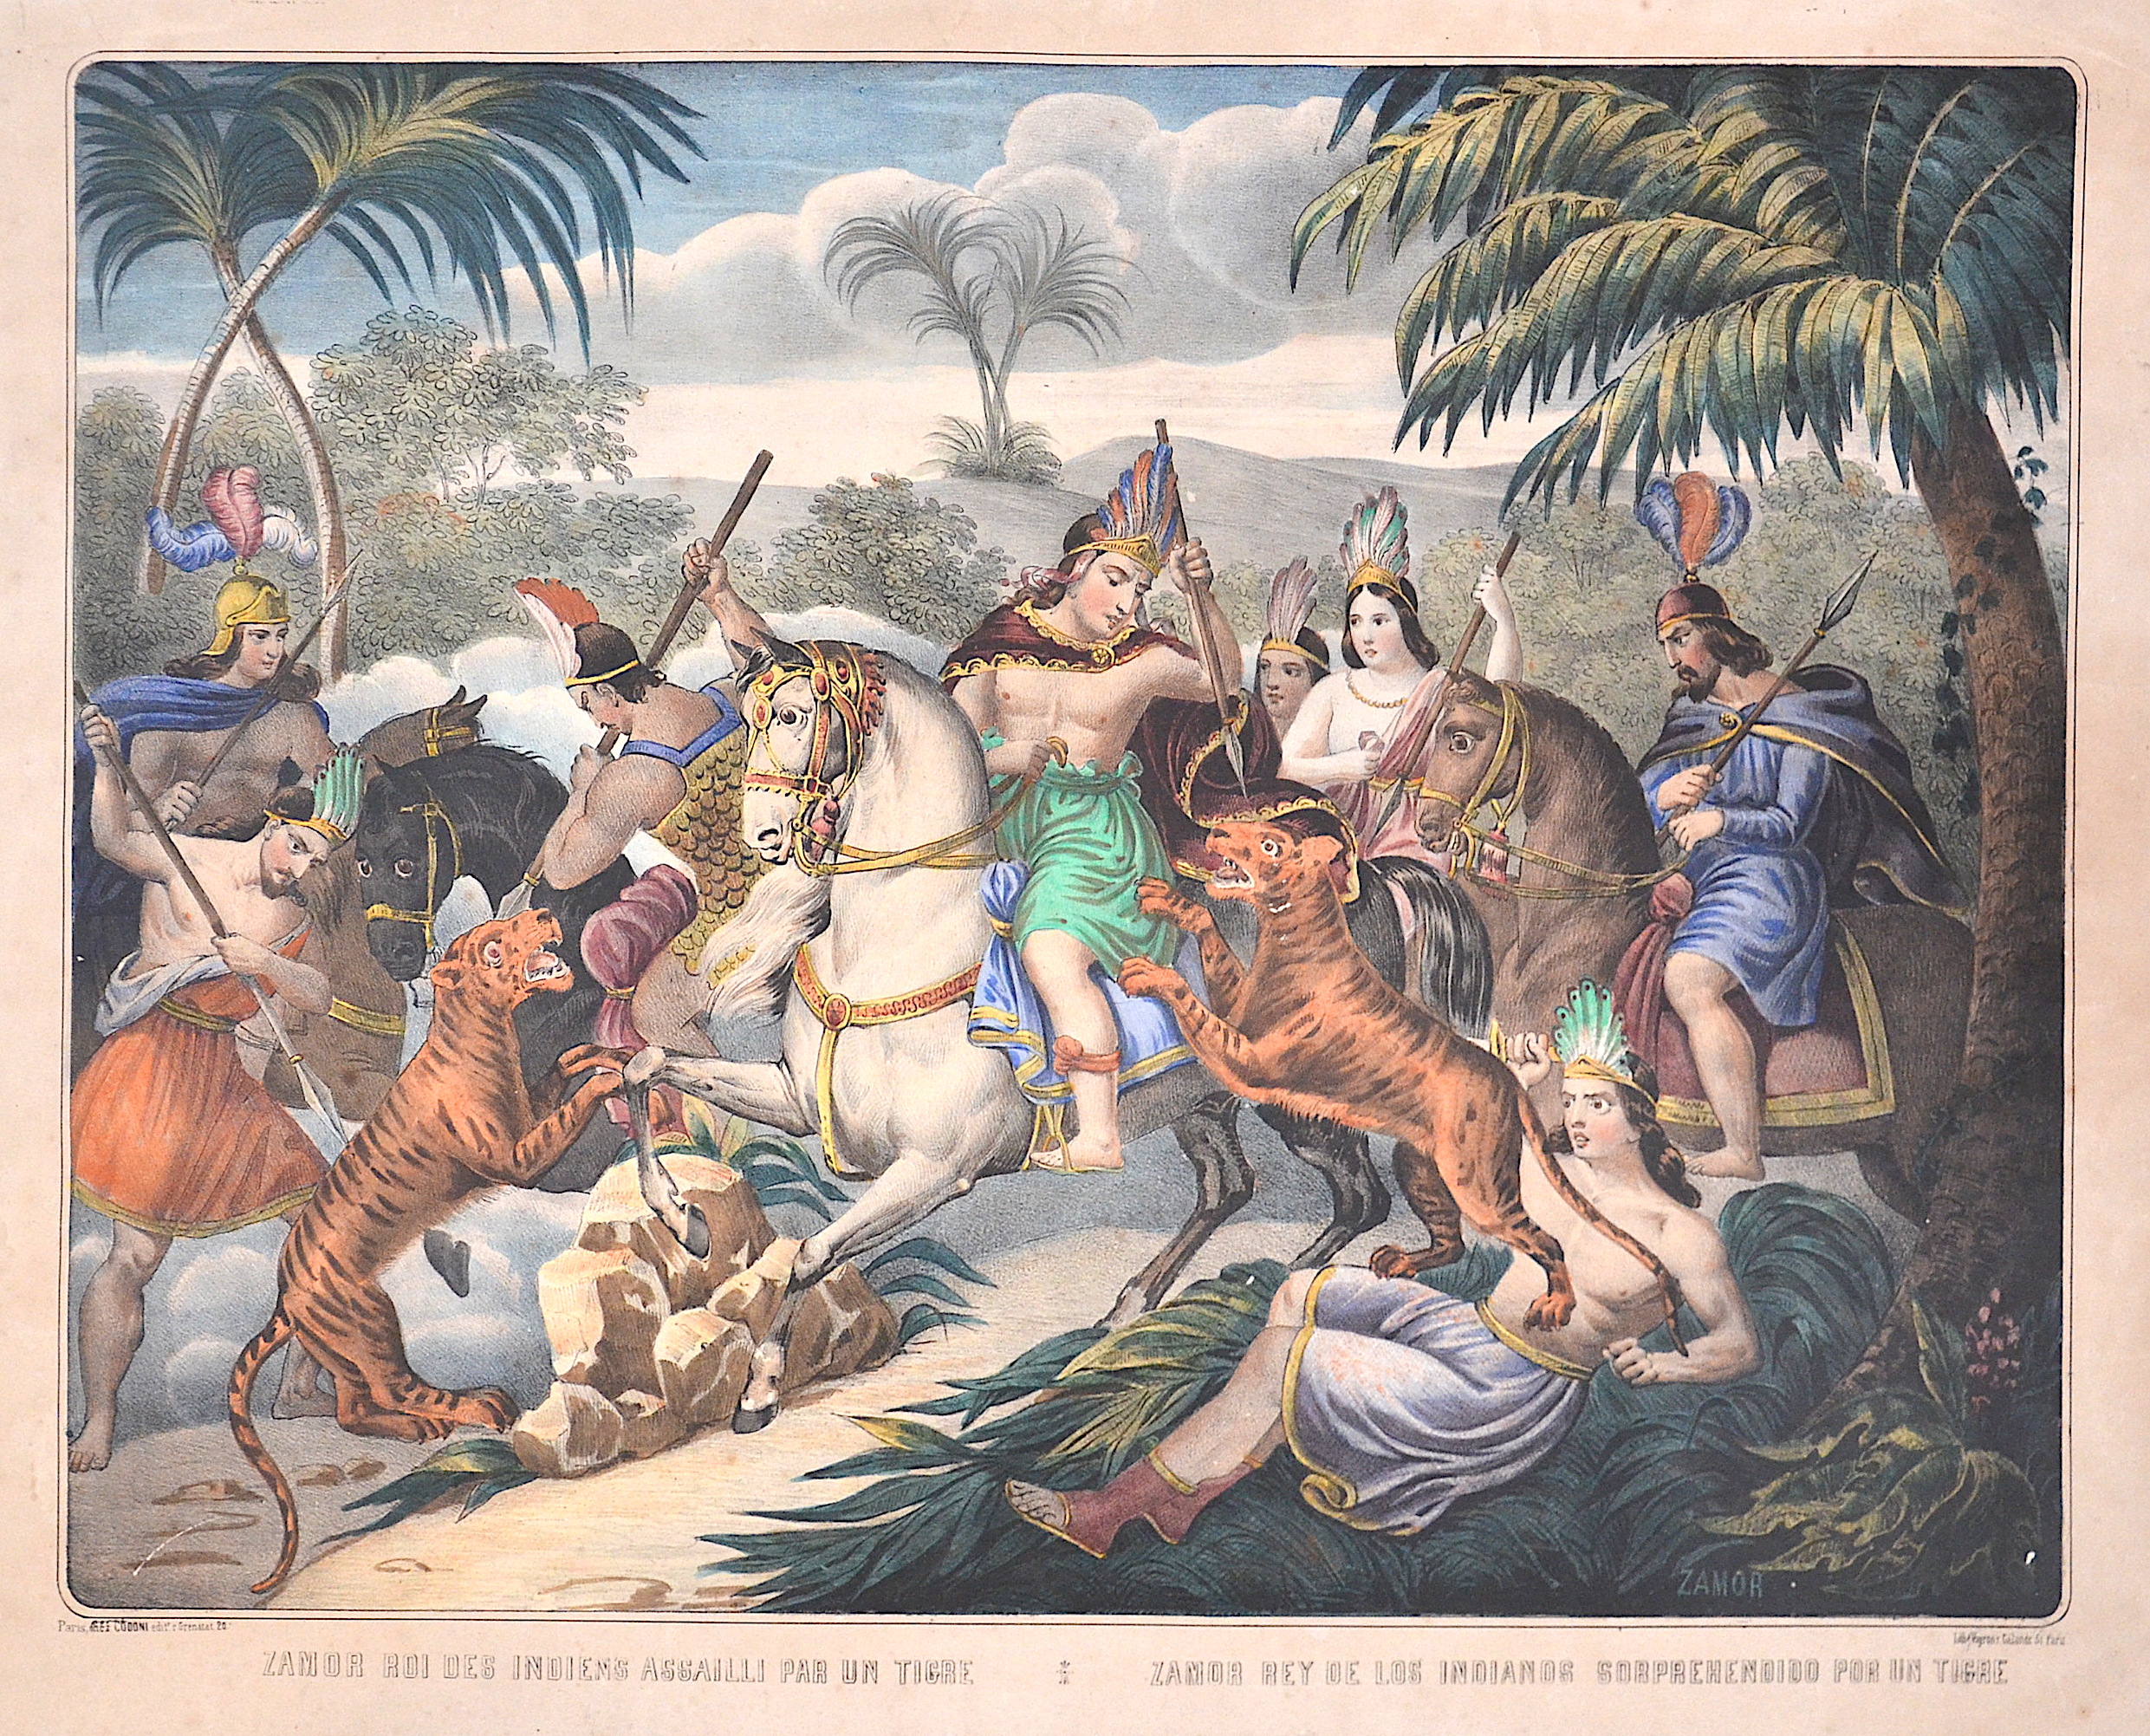 Ray Gordon N. Zamor roi des Indiens Assailli par un Tigre / Zamor rey de los indianos sorprehendido por un Tigre